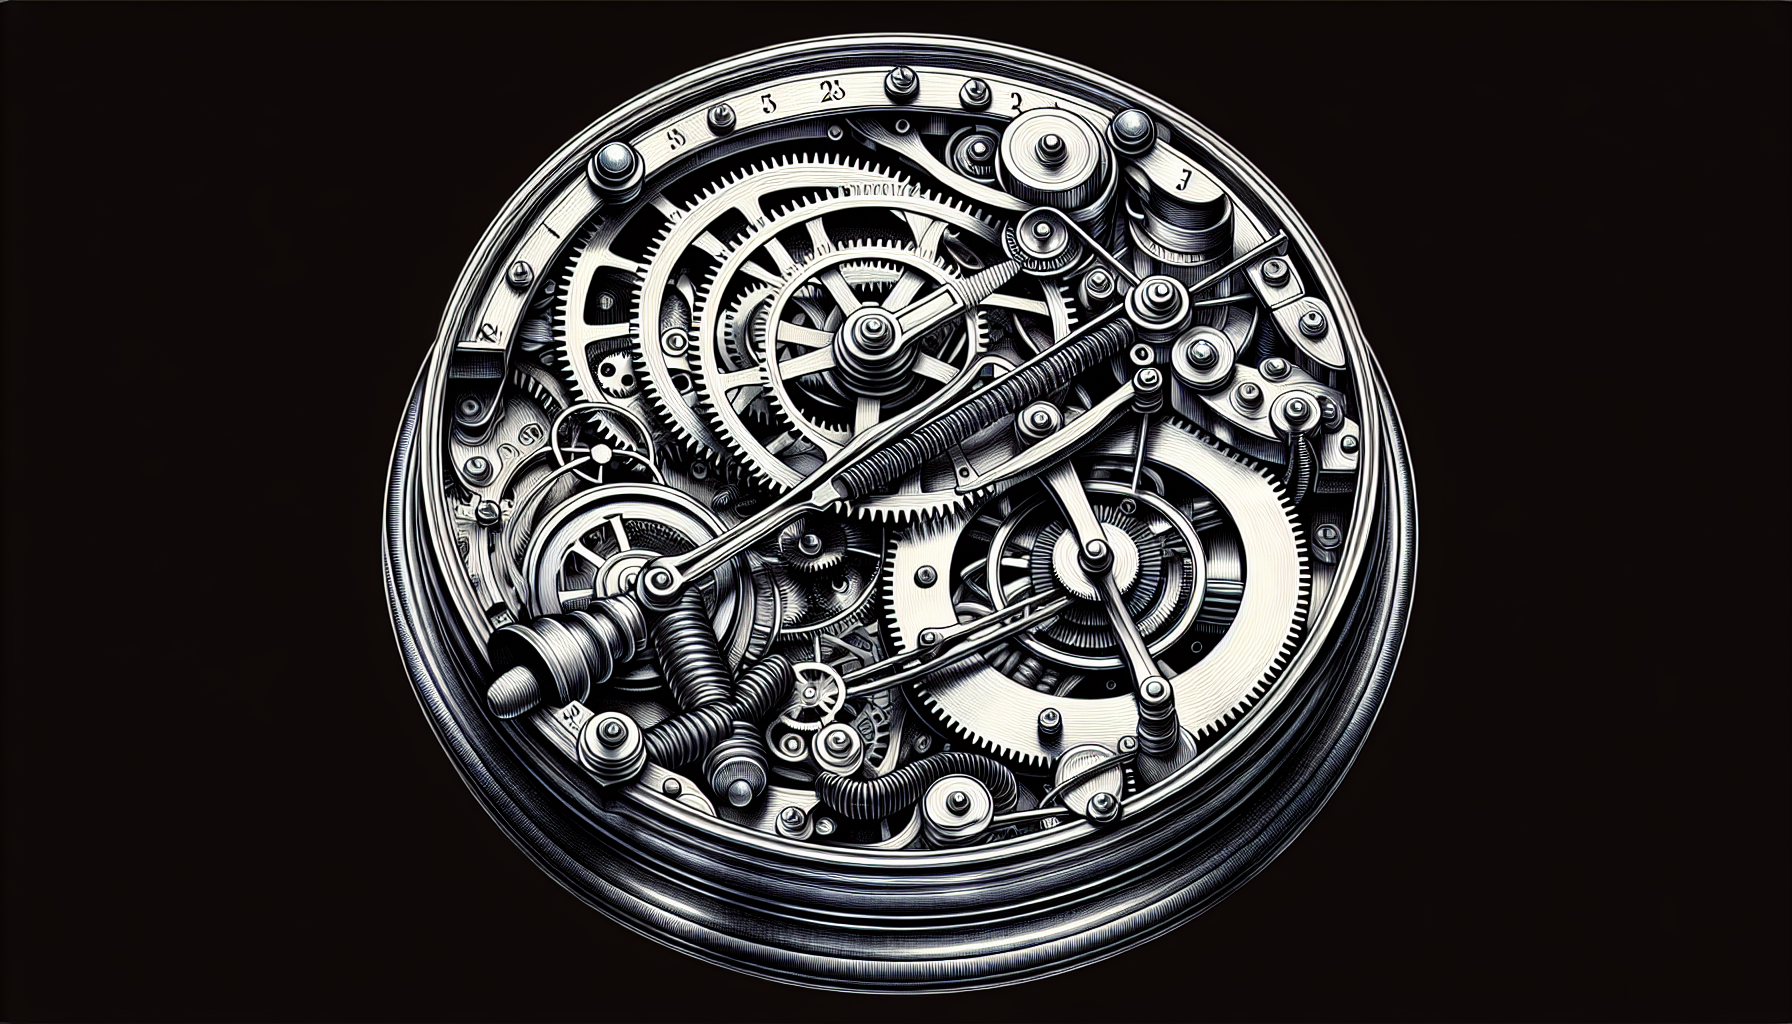 Mechanical movement in a mantel clock